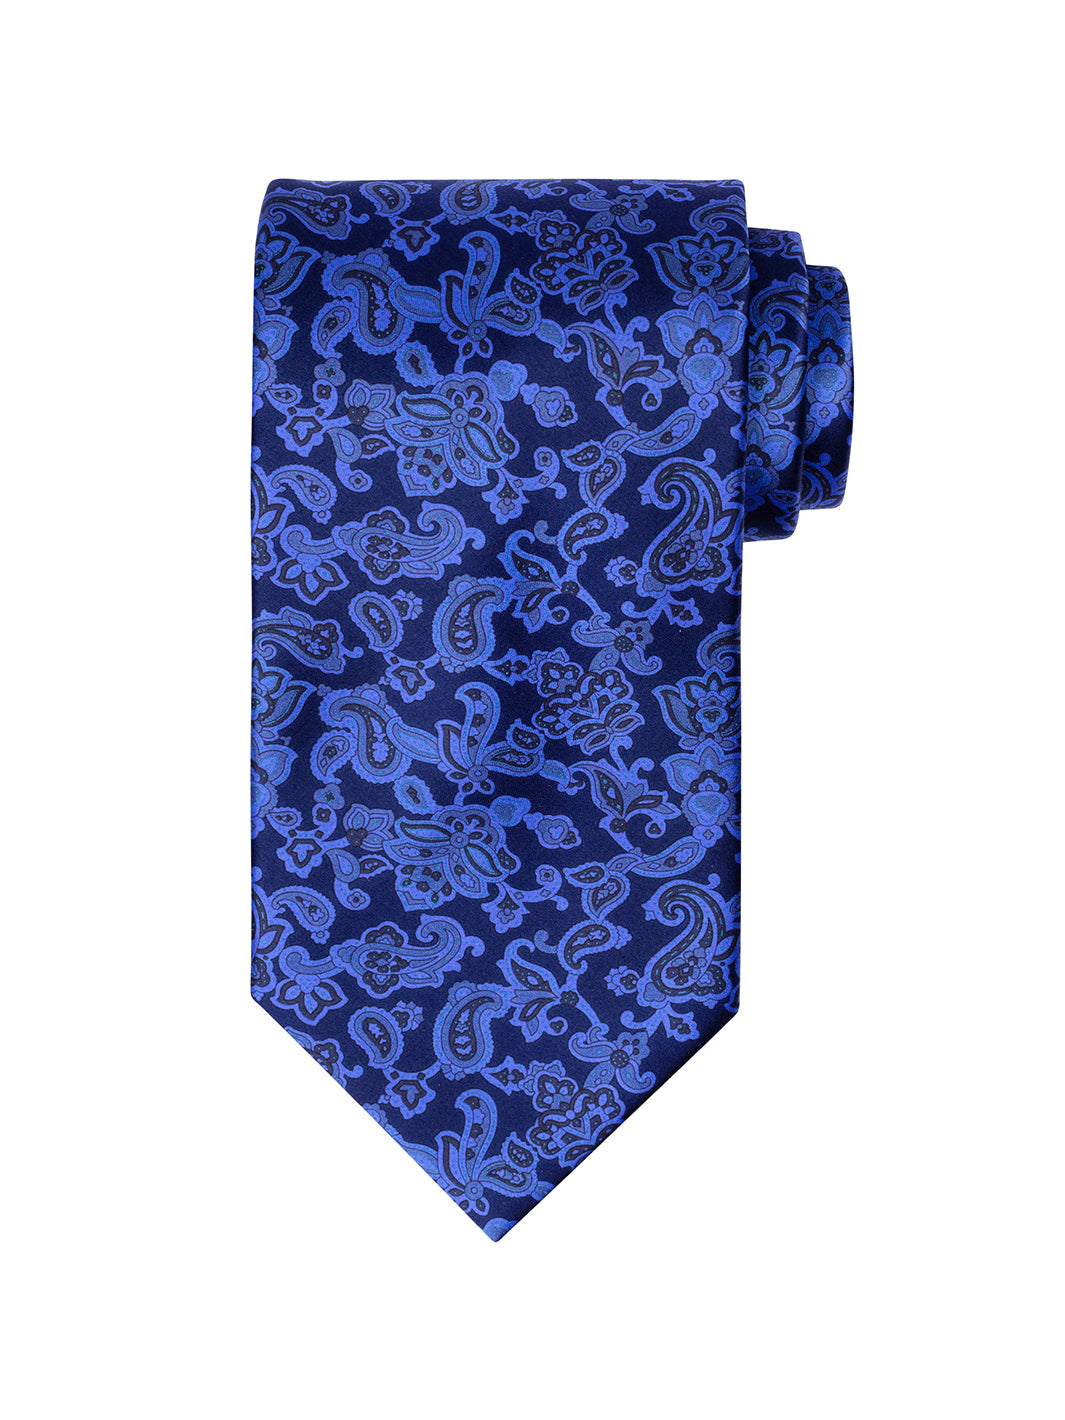 Stefano Ricci Black and Blue Paisley Tie